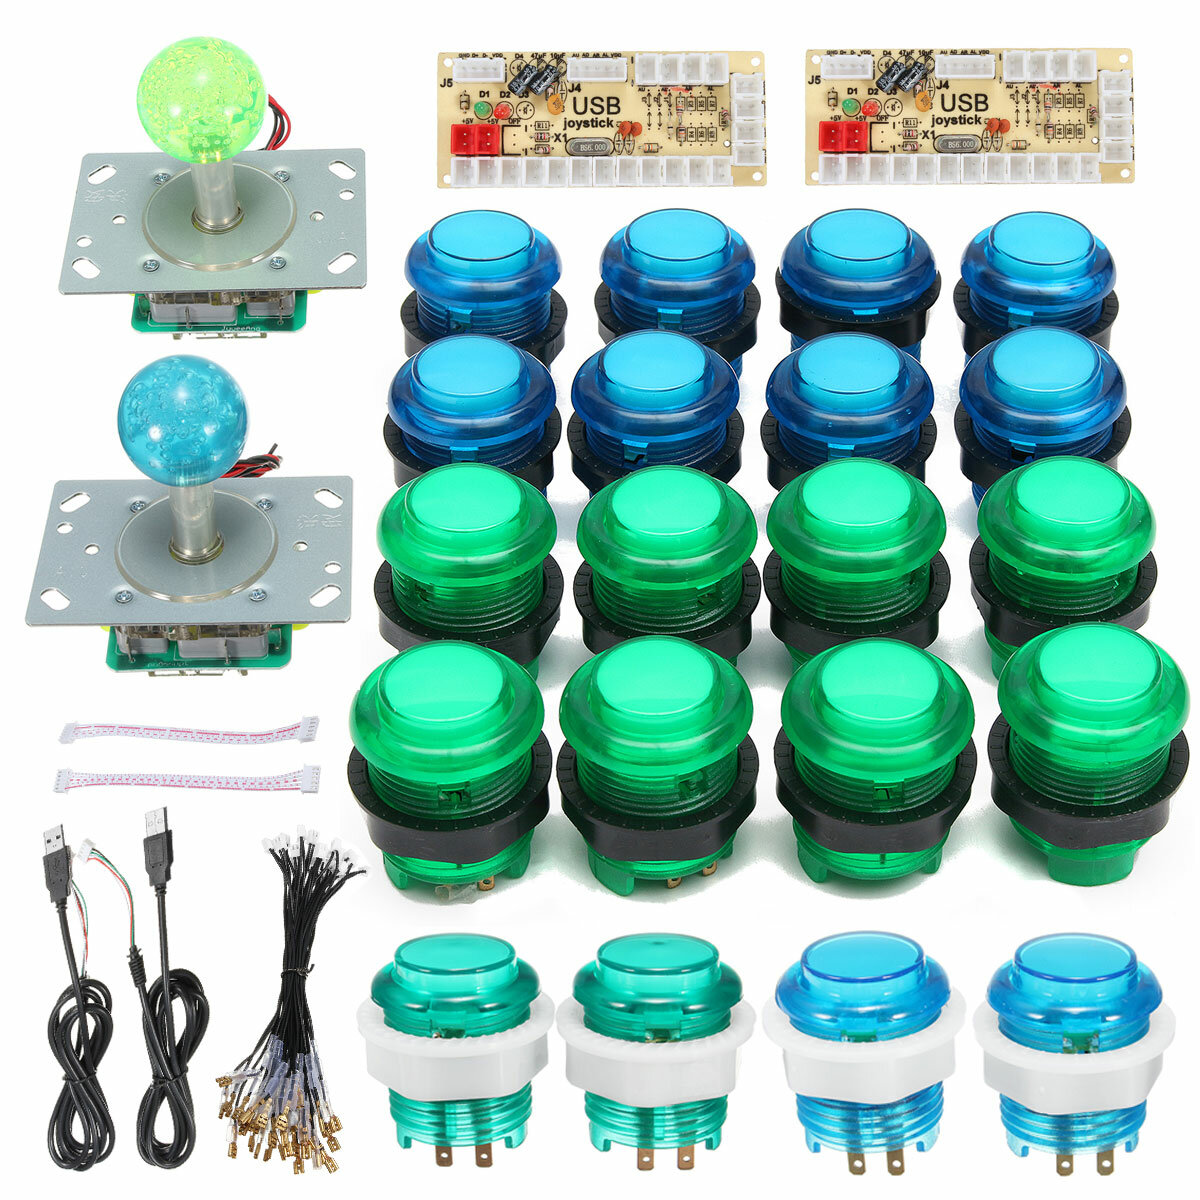 

DIY джойстик аркадные наборы 20 LED аркада Кнопки + 2 джойстика + 2 USB-кодировщика комплект + кабели набор деталей арка